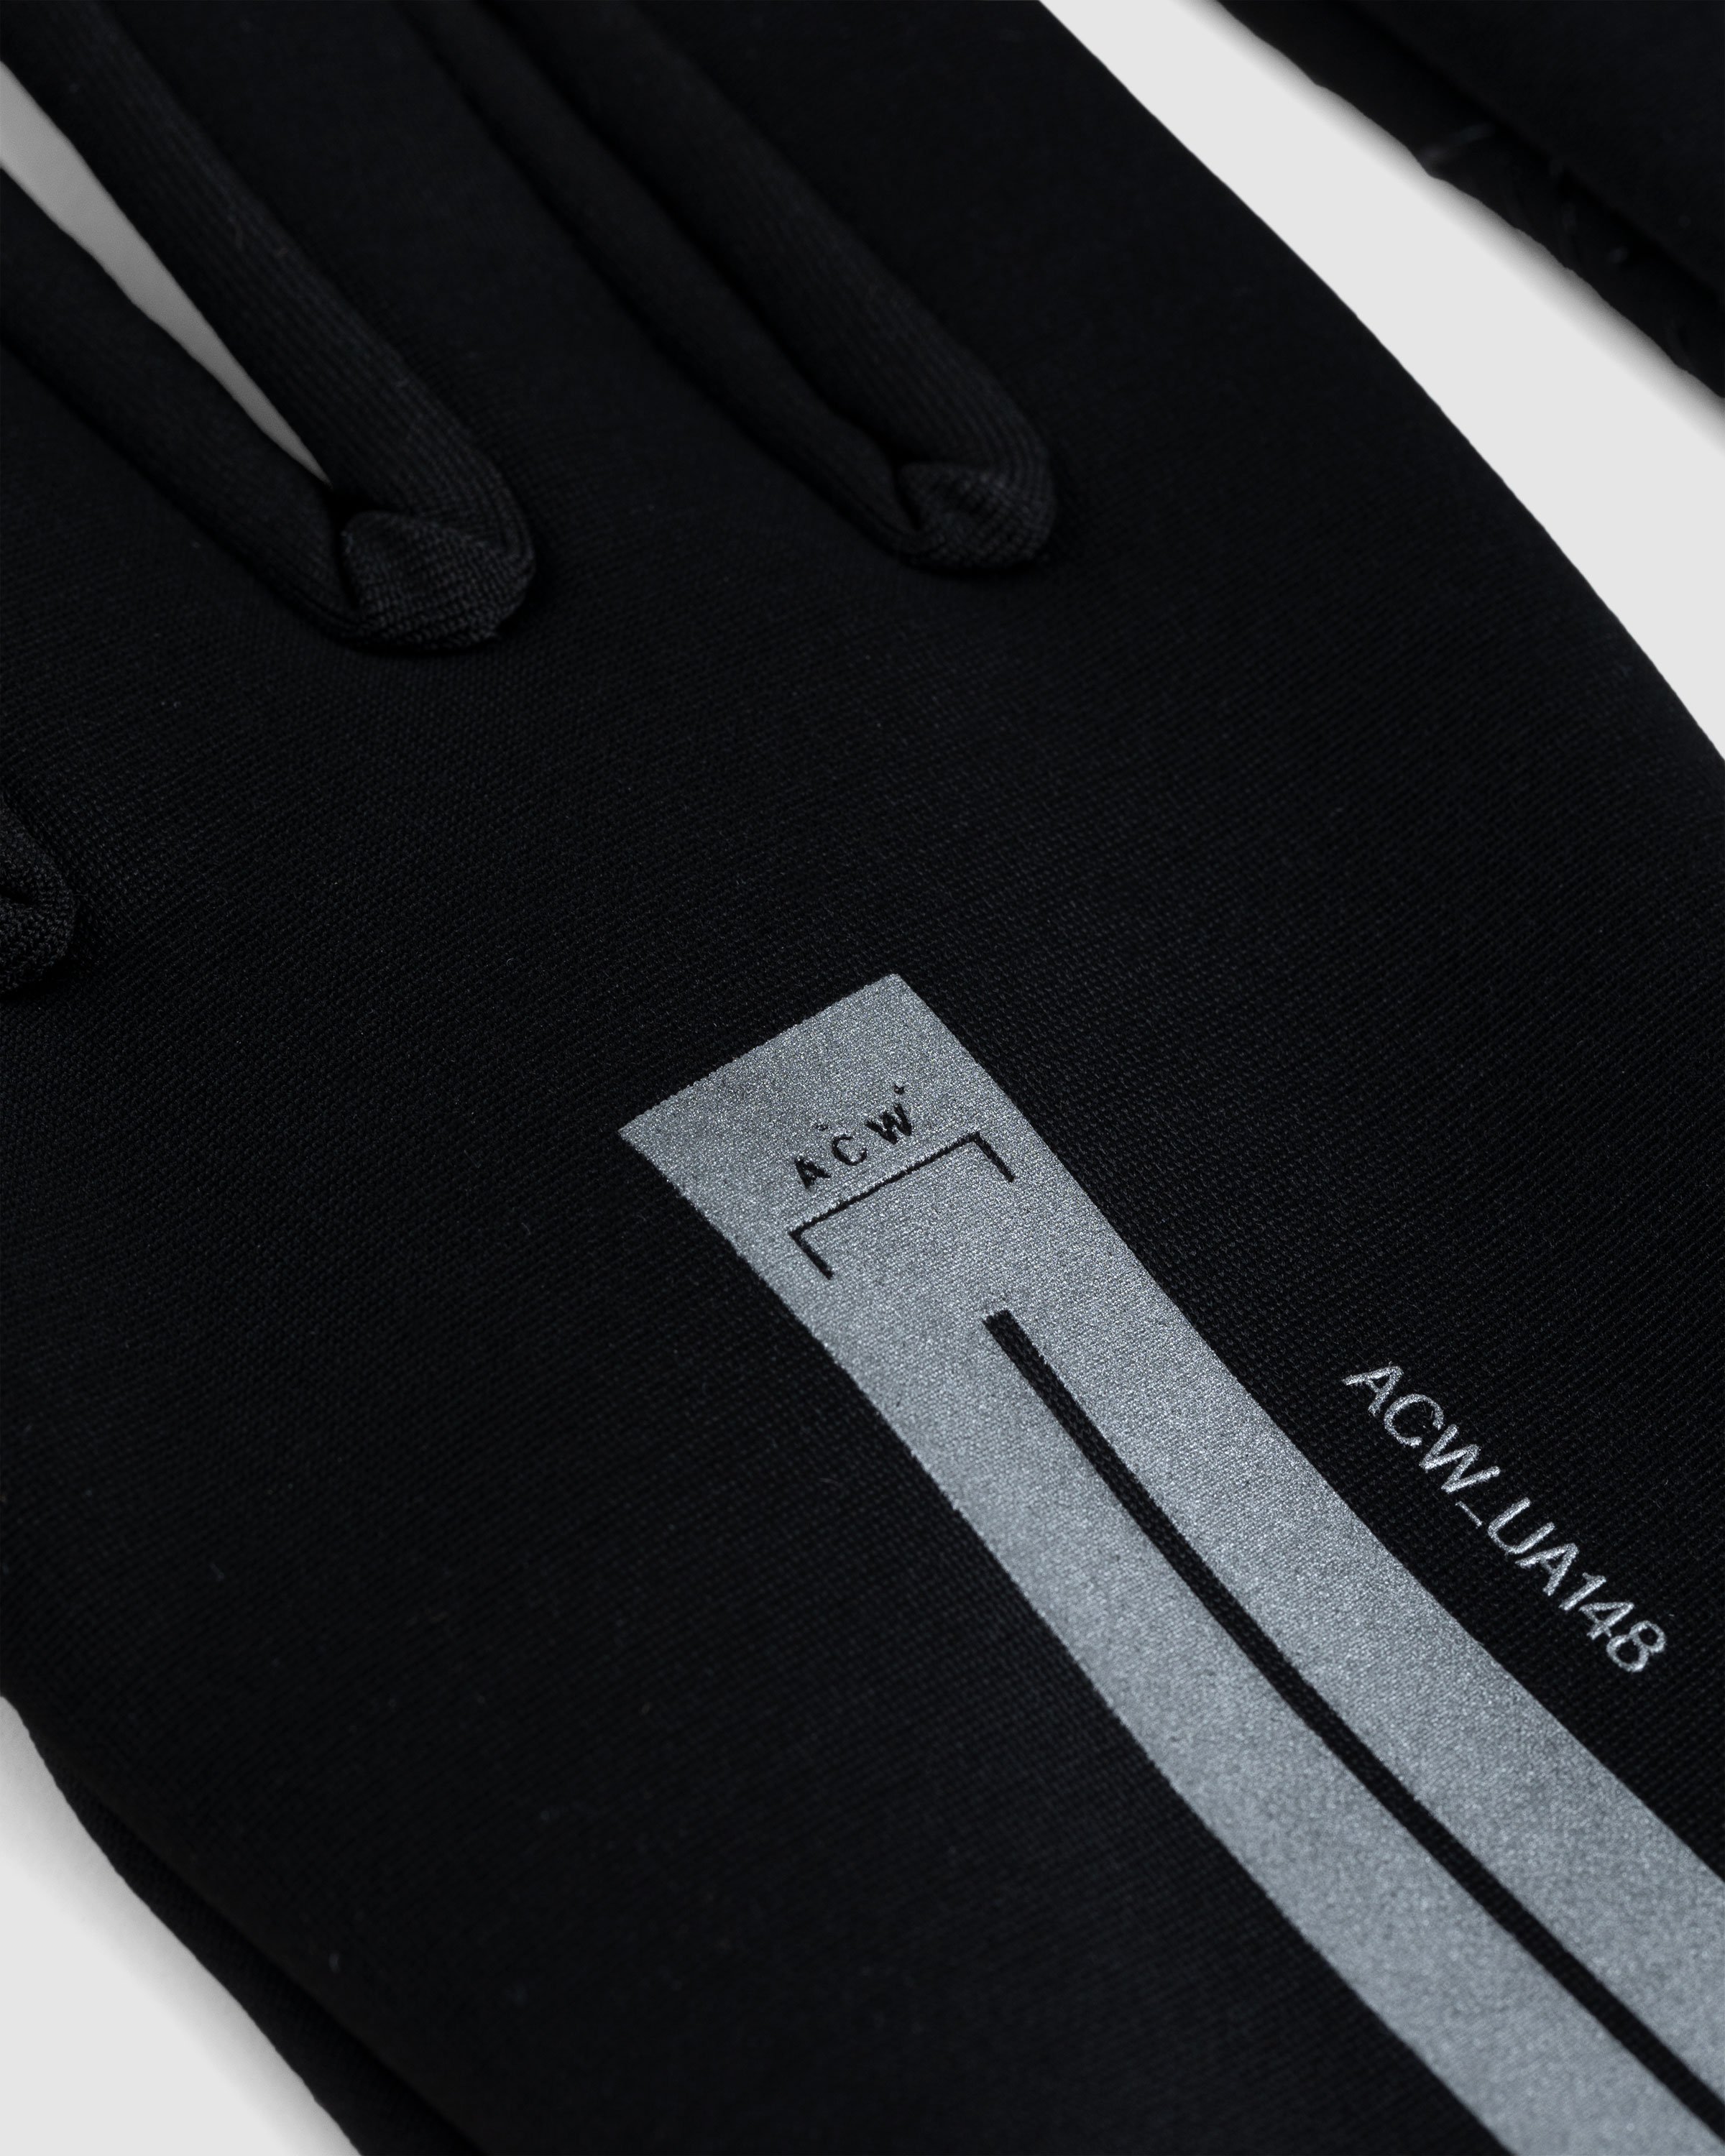 A-Cold-Wall* - Stria Tech Gloves Black - Accessories - Black - Image 4